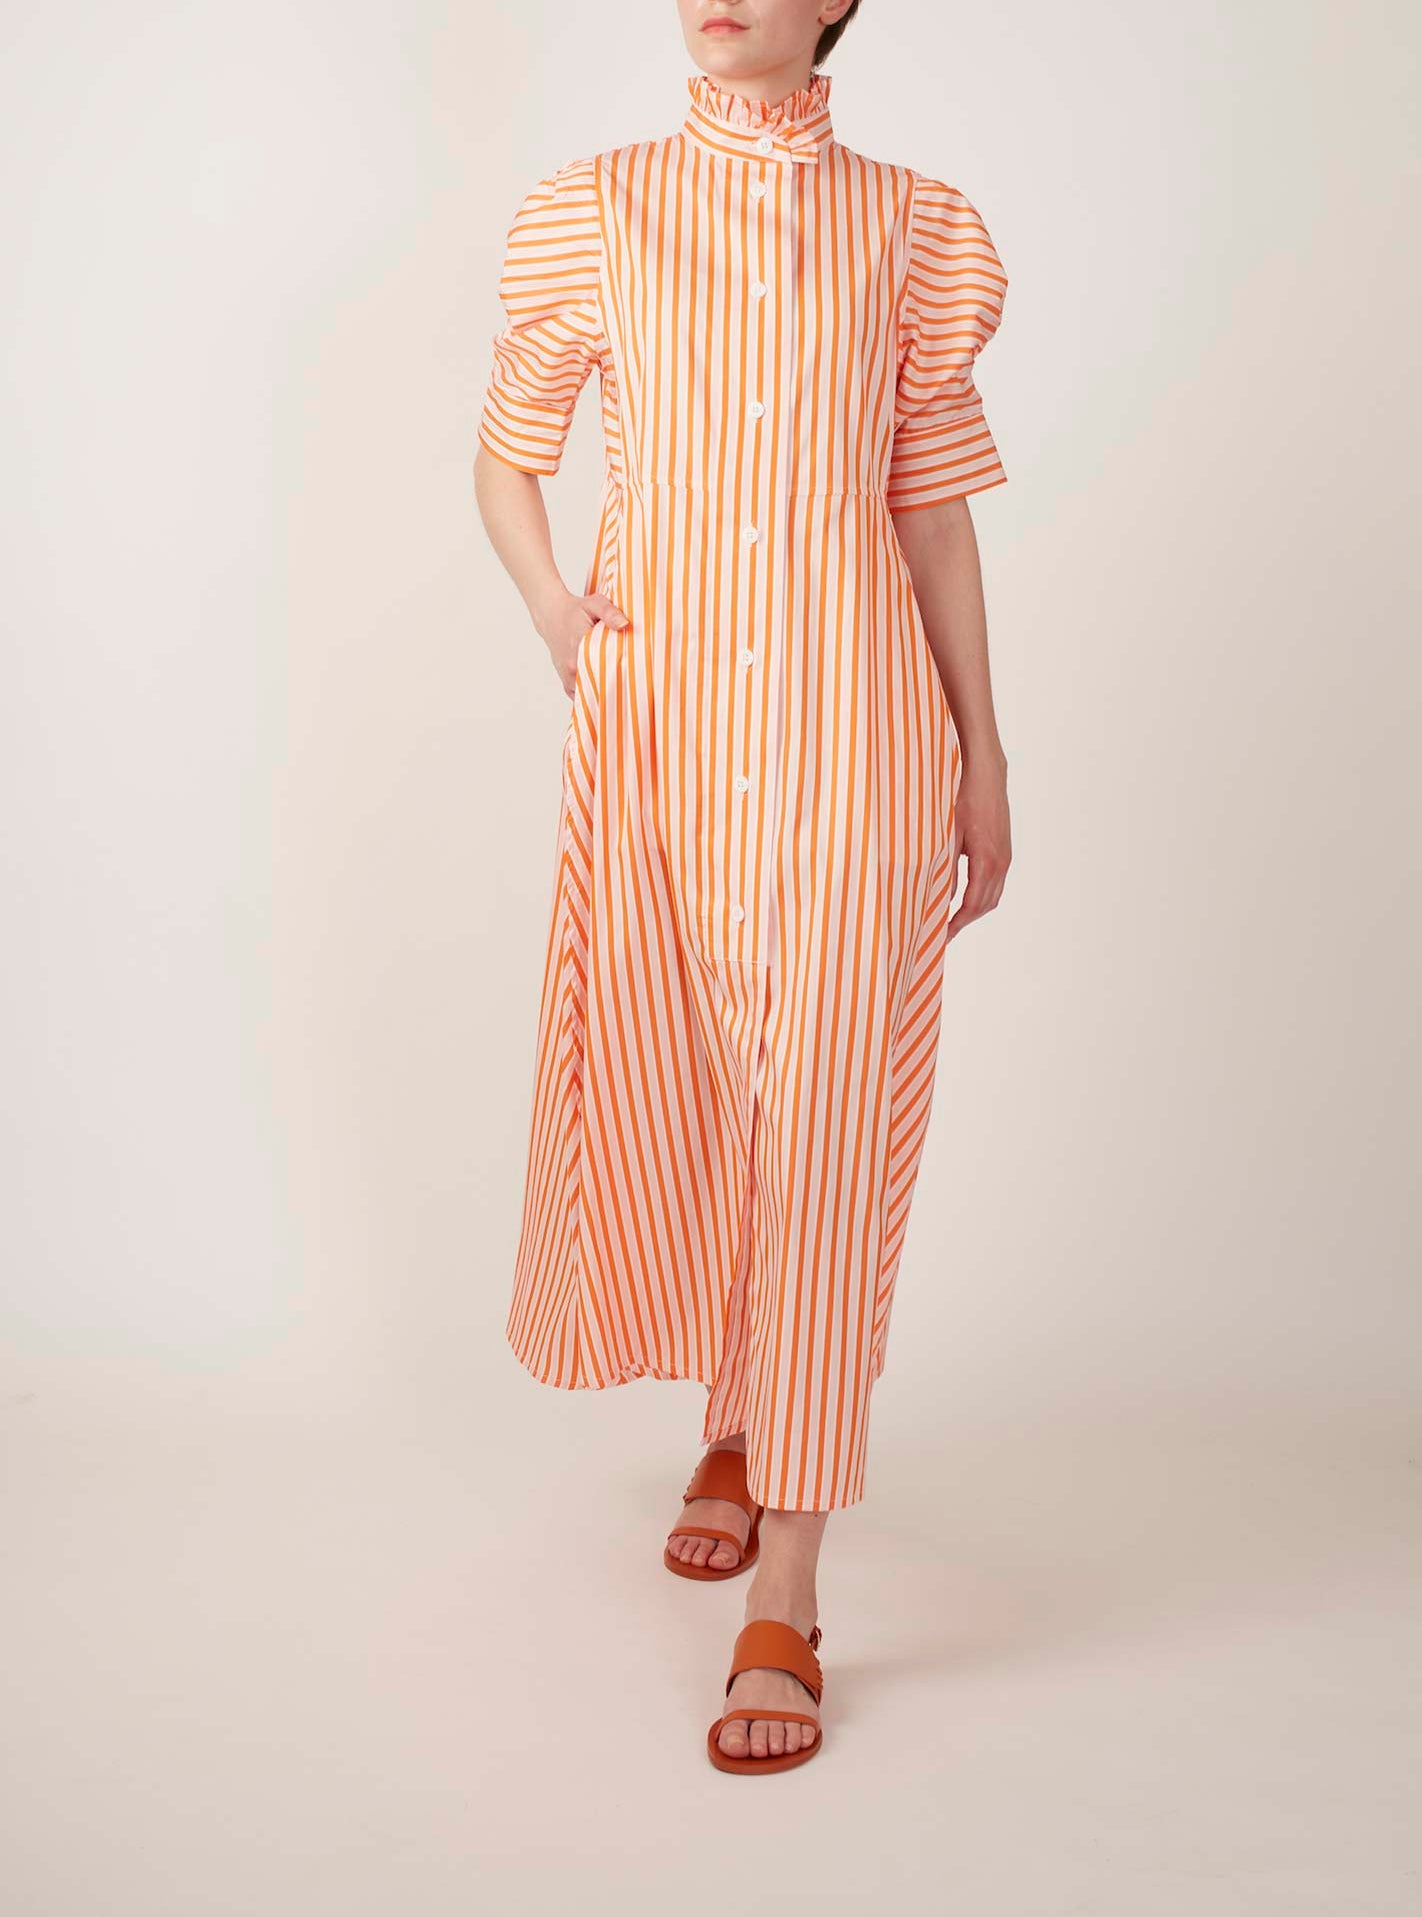 Venetia Mayfair - Orange, Salmon & White Dress by Thierry Colson